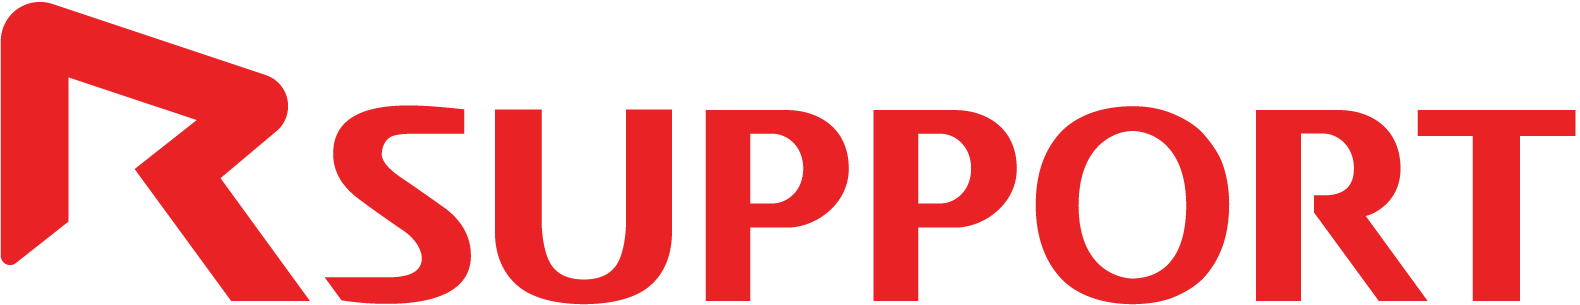 Rsupport Logo